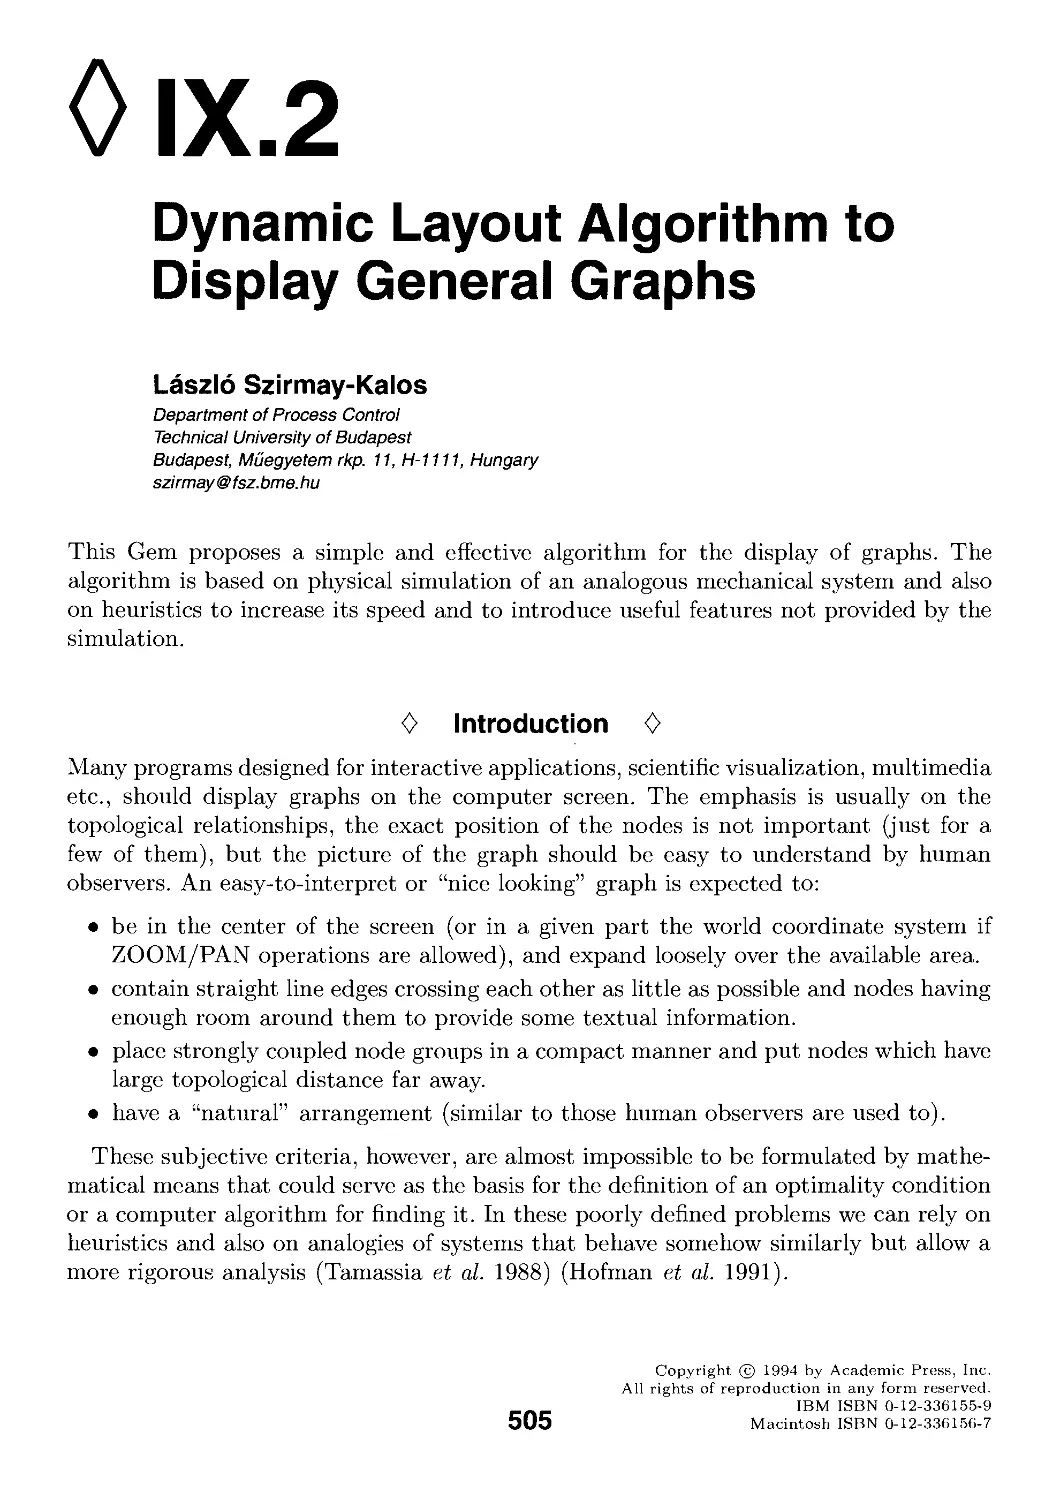 IX.2. Dynamic Layout Algorithm to Display General Graphs by Laszlo Szirmay-Kalos